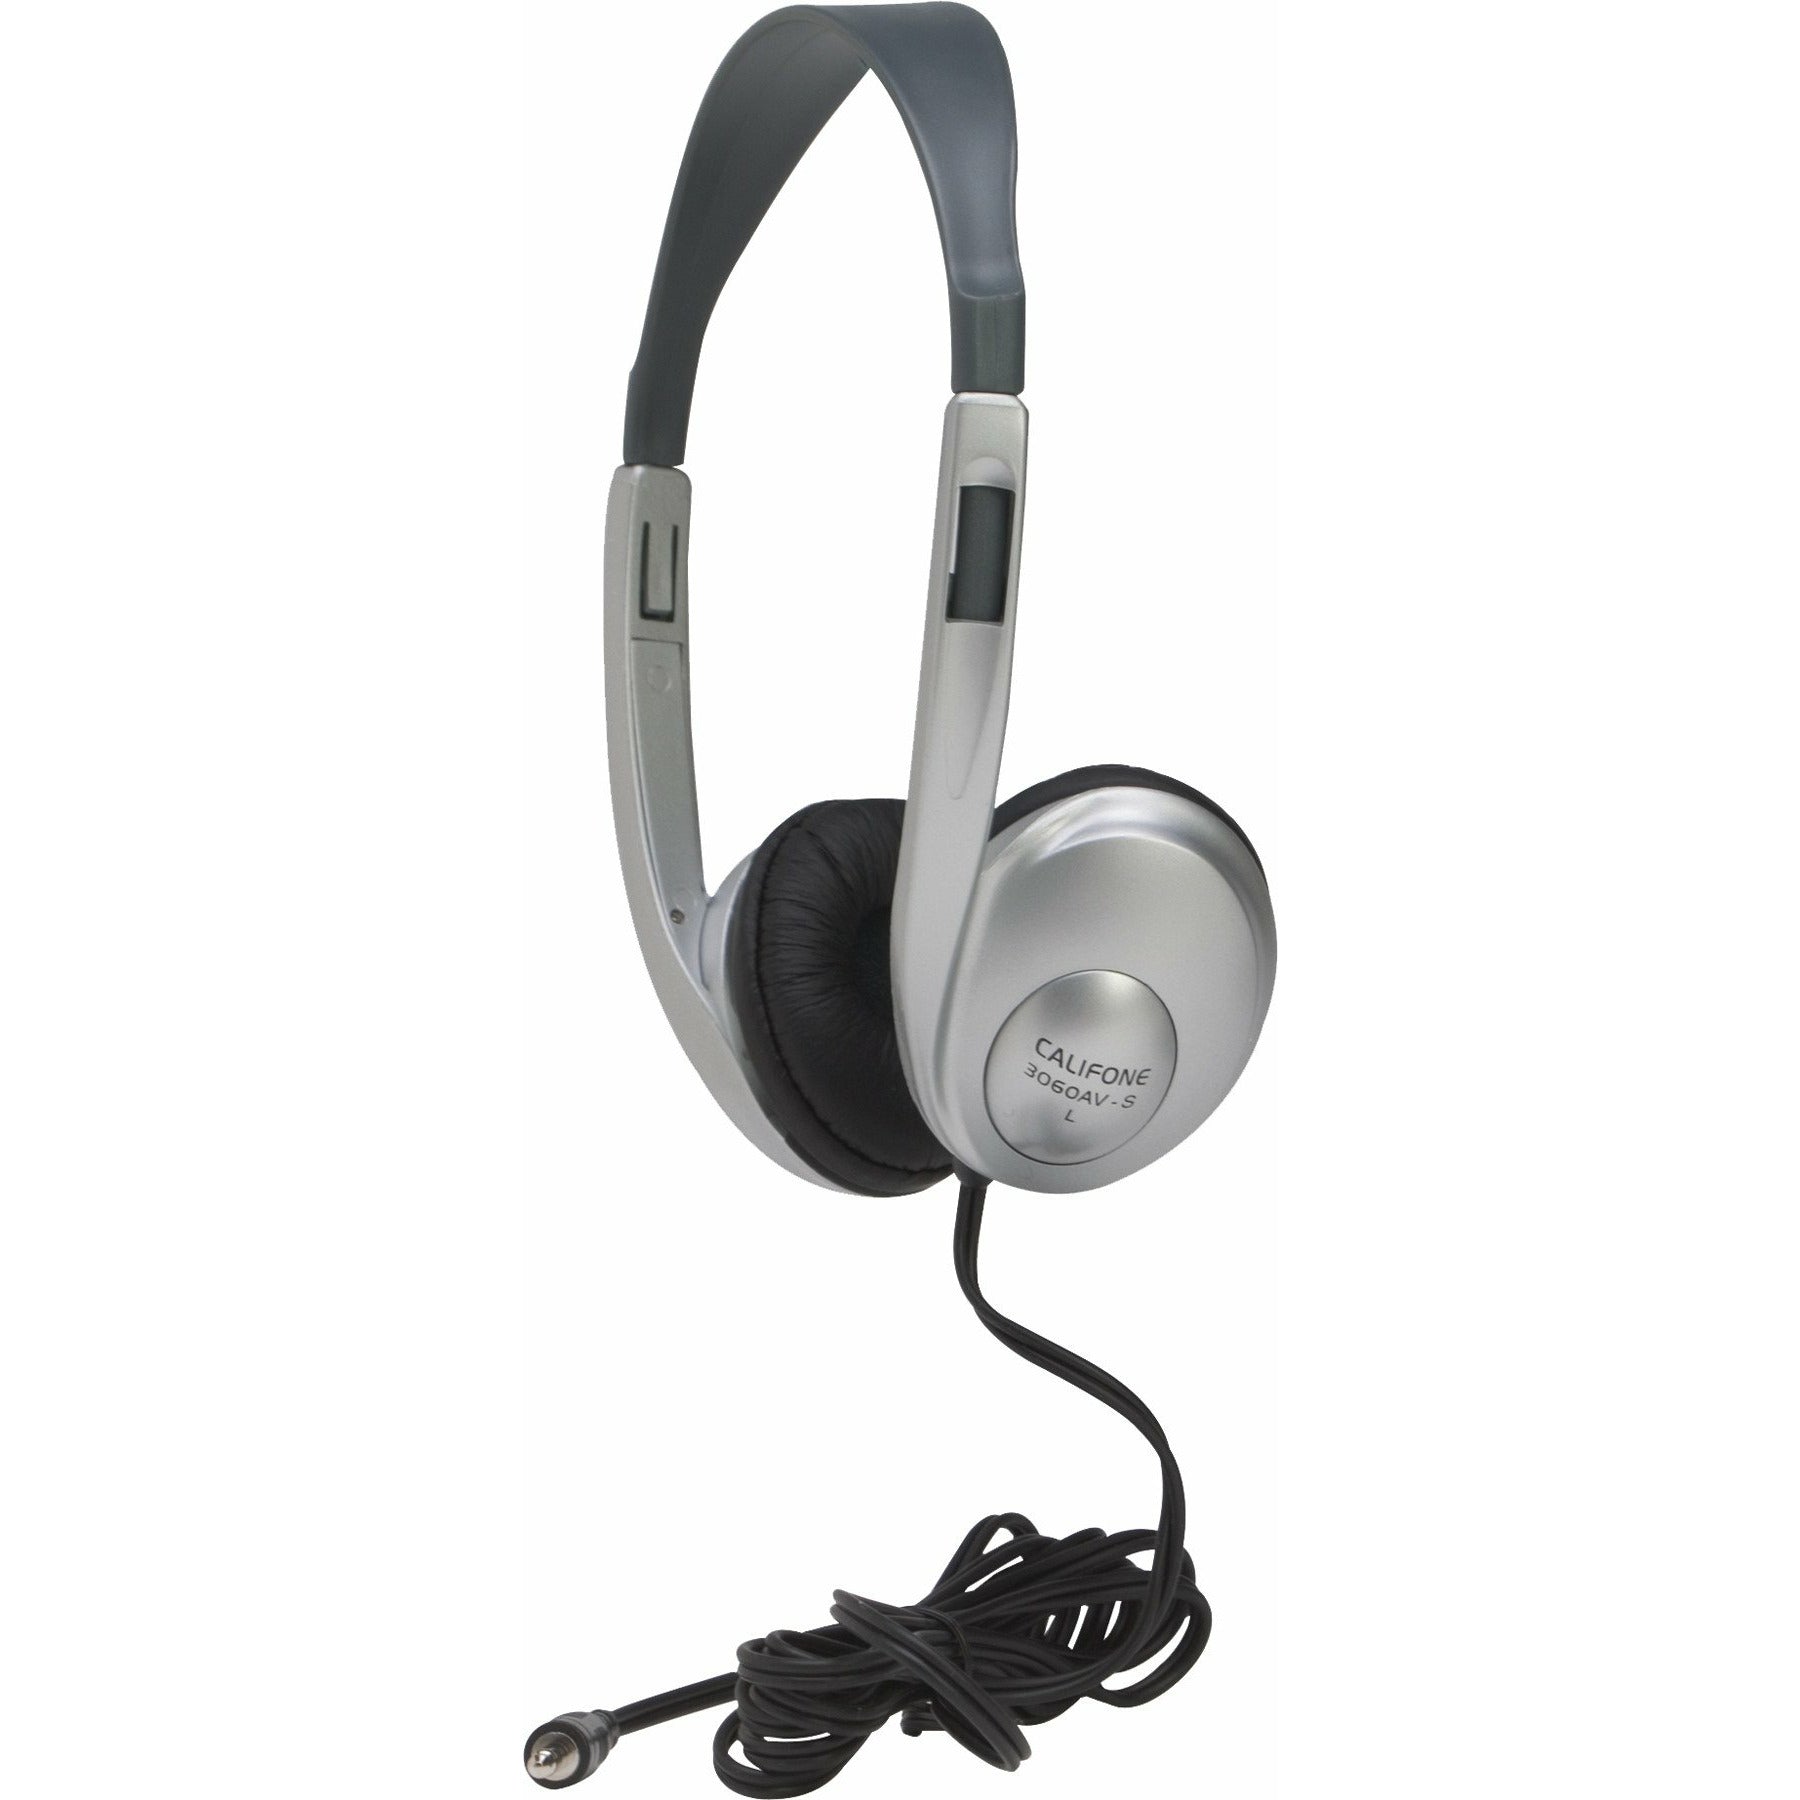 Multimedia Stereo Headphone, Silver